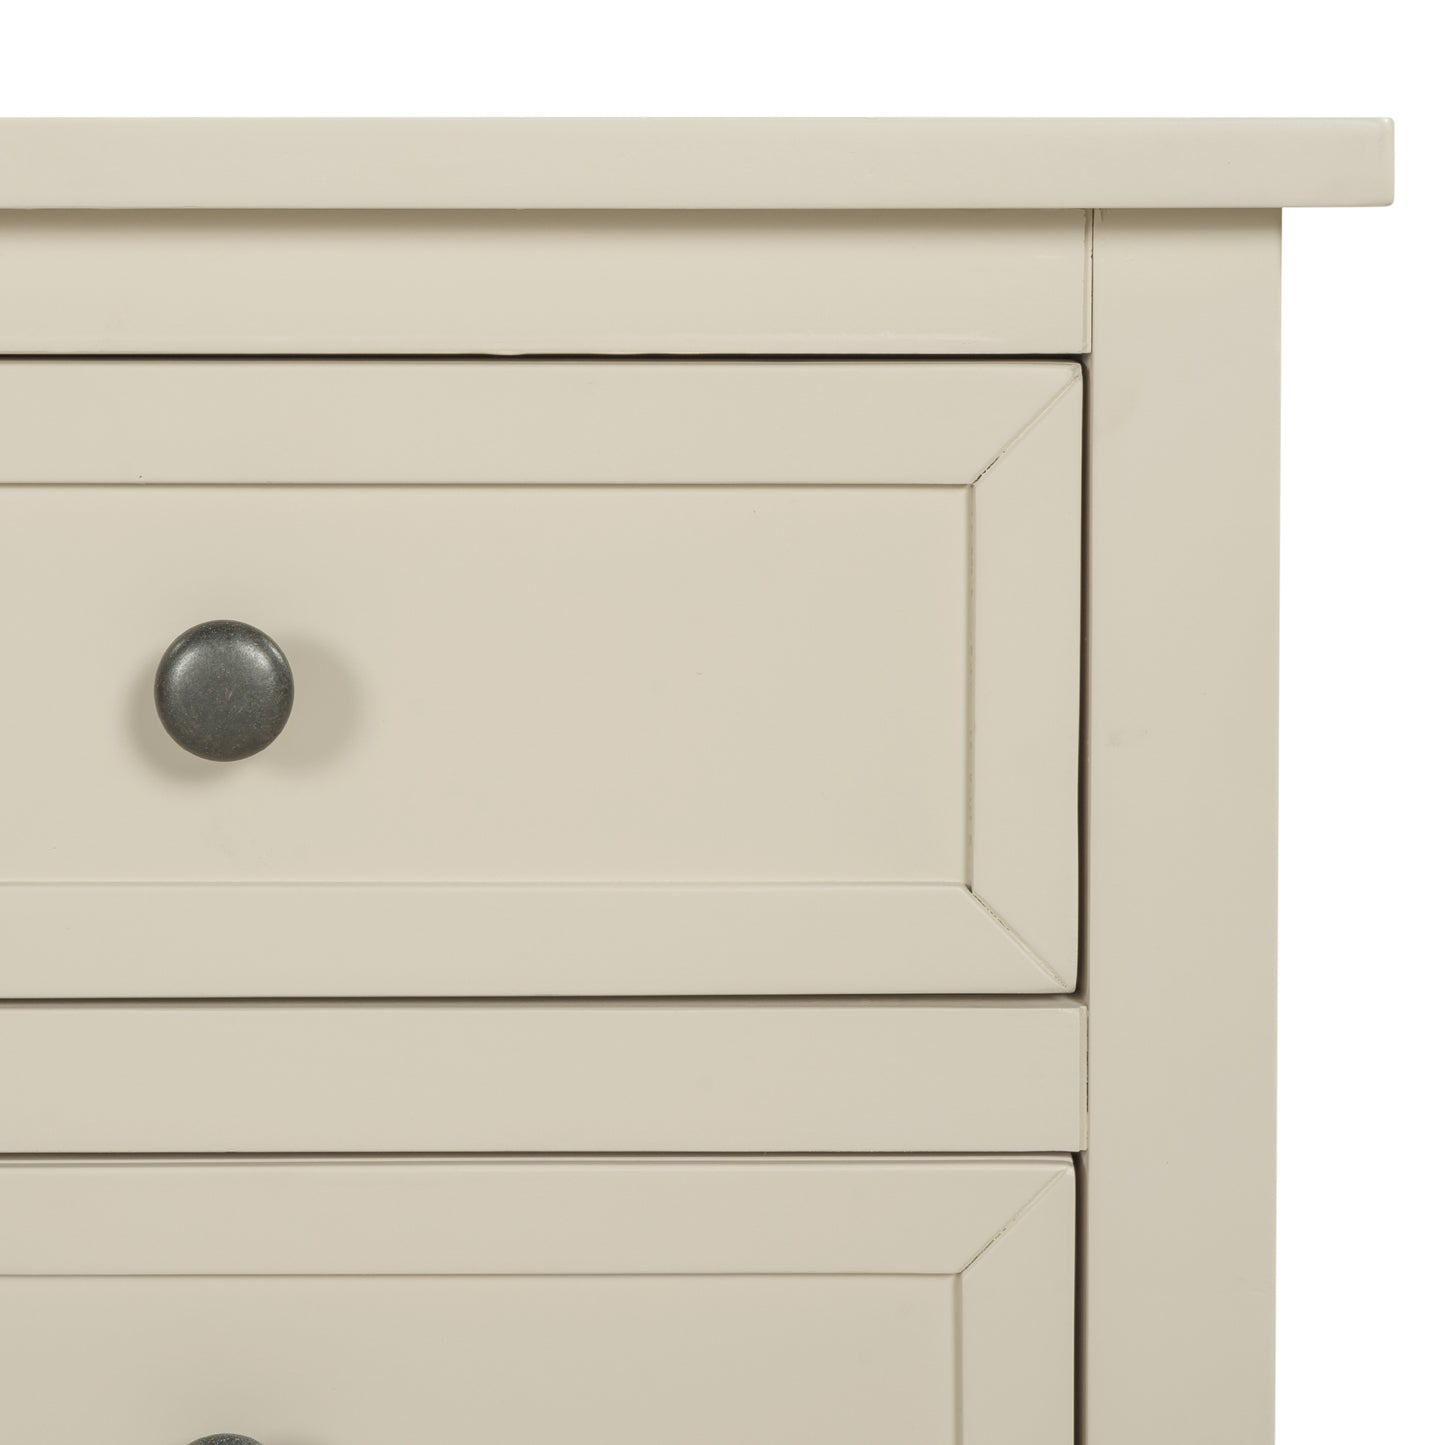 U_STYLE 3-Drawer End Table Storage Wood Cabinet  ，Solid wood frame